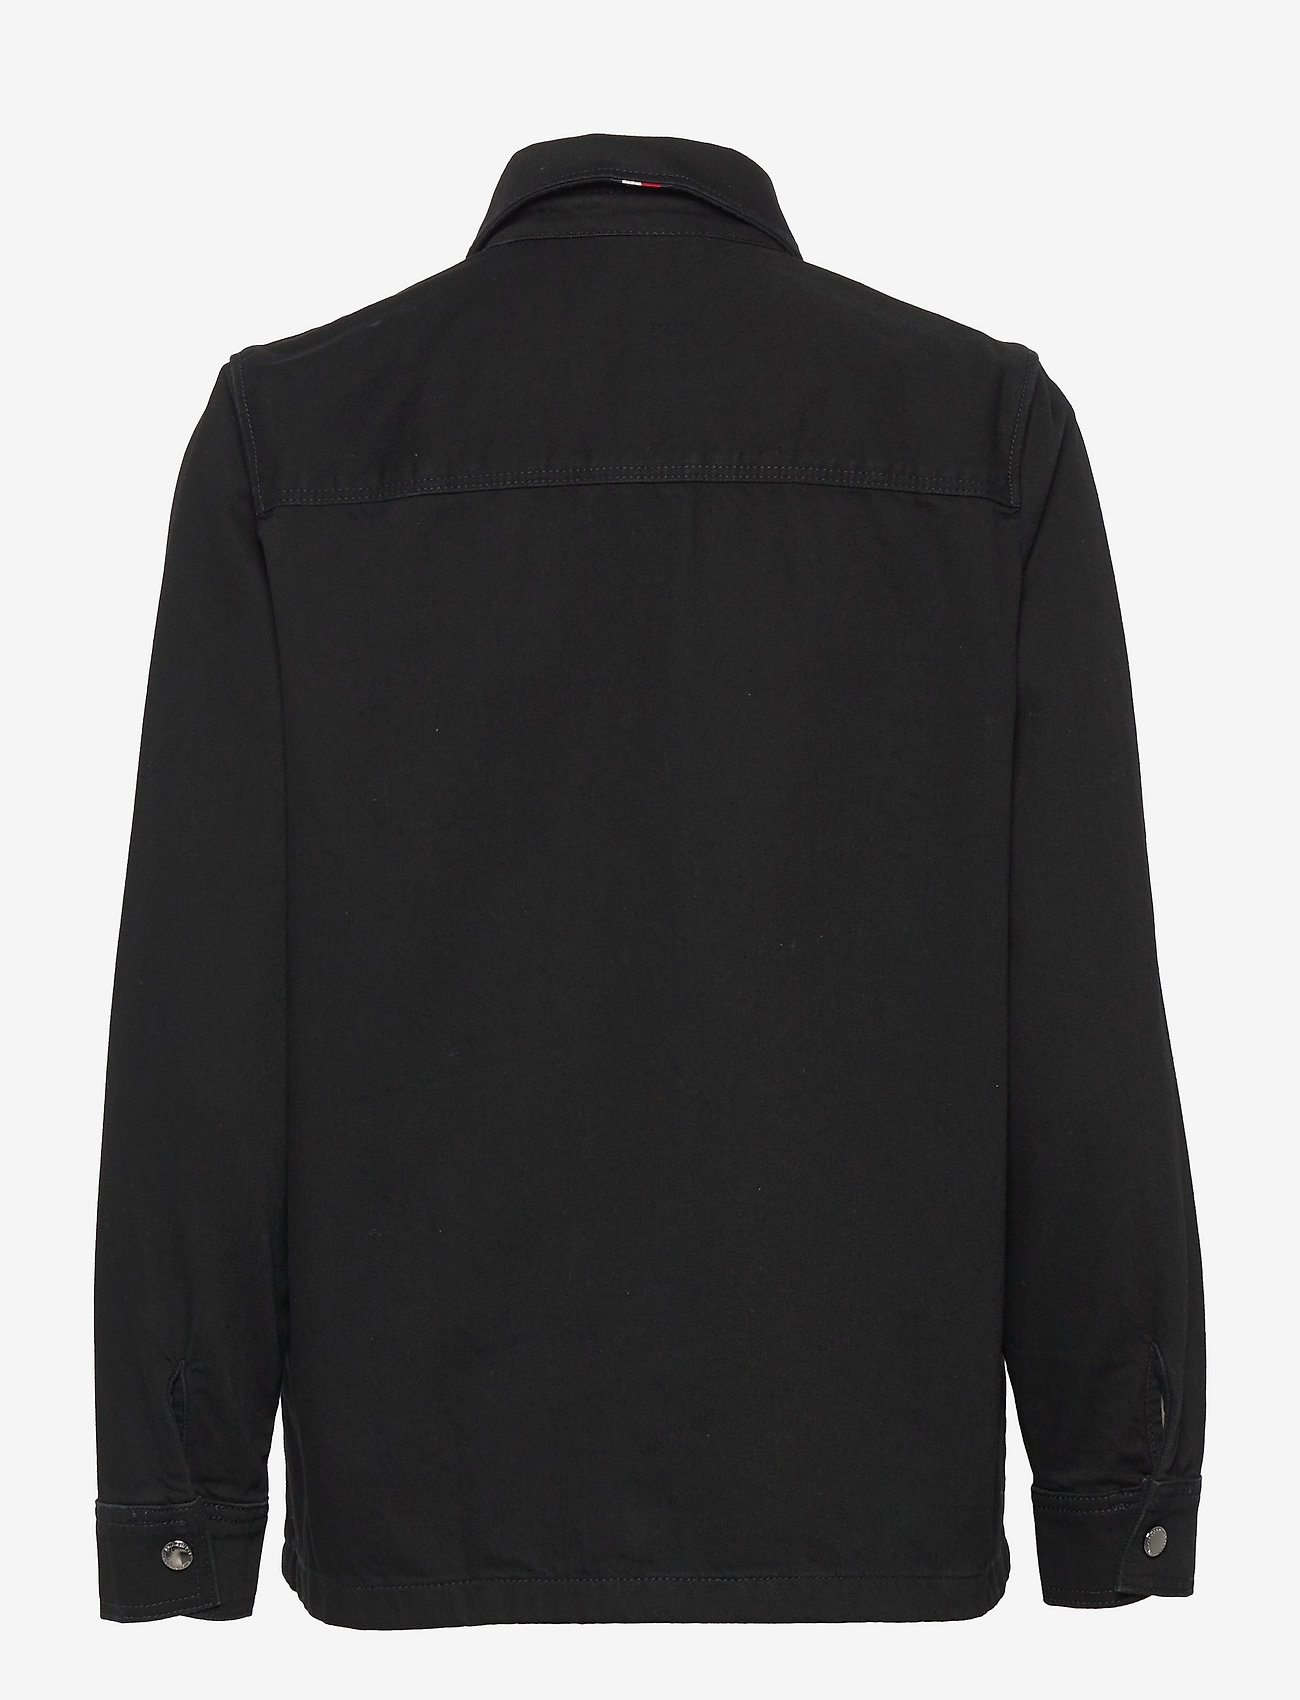 Tommy Hilfiger Dnm Shacket Shirt Black - Long-sleeved | Boozt.com